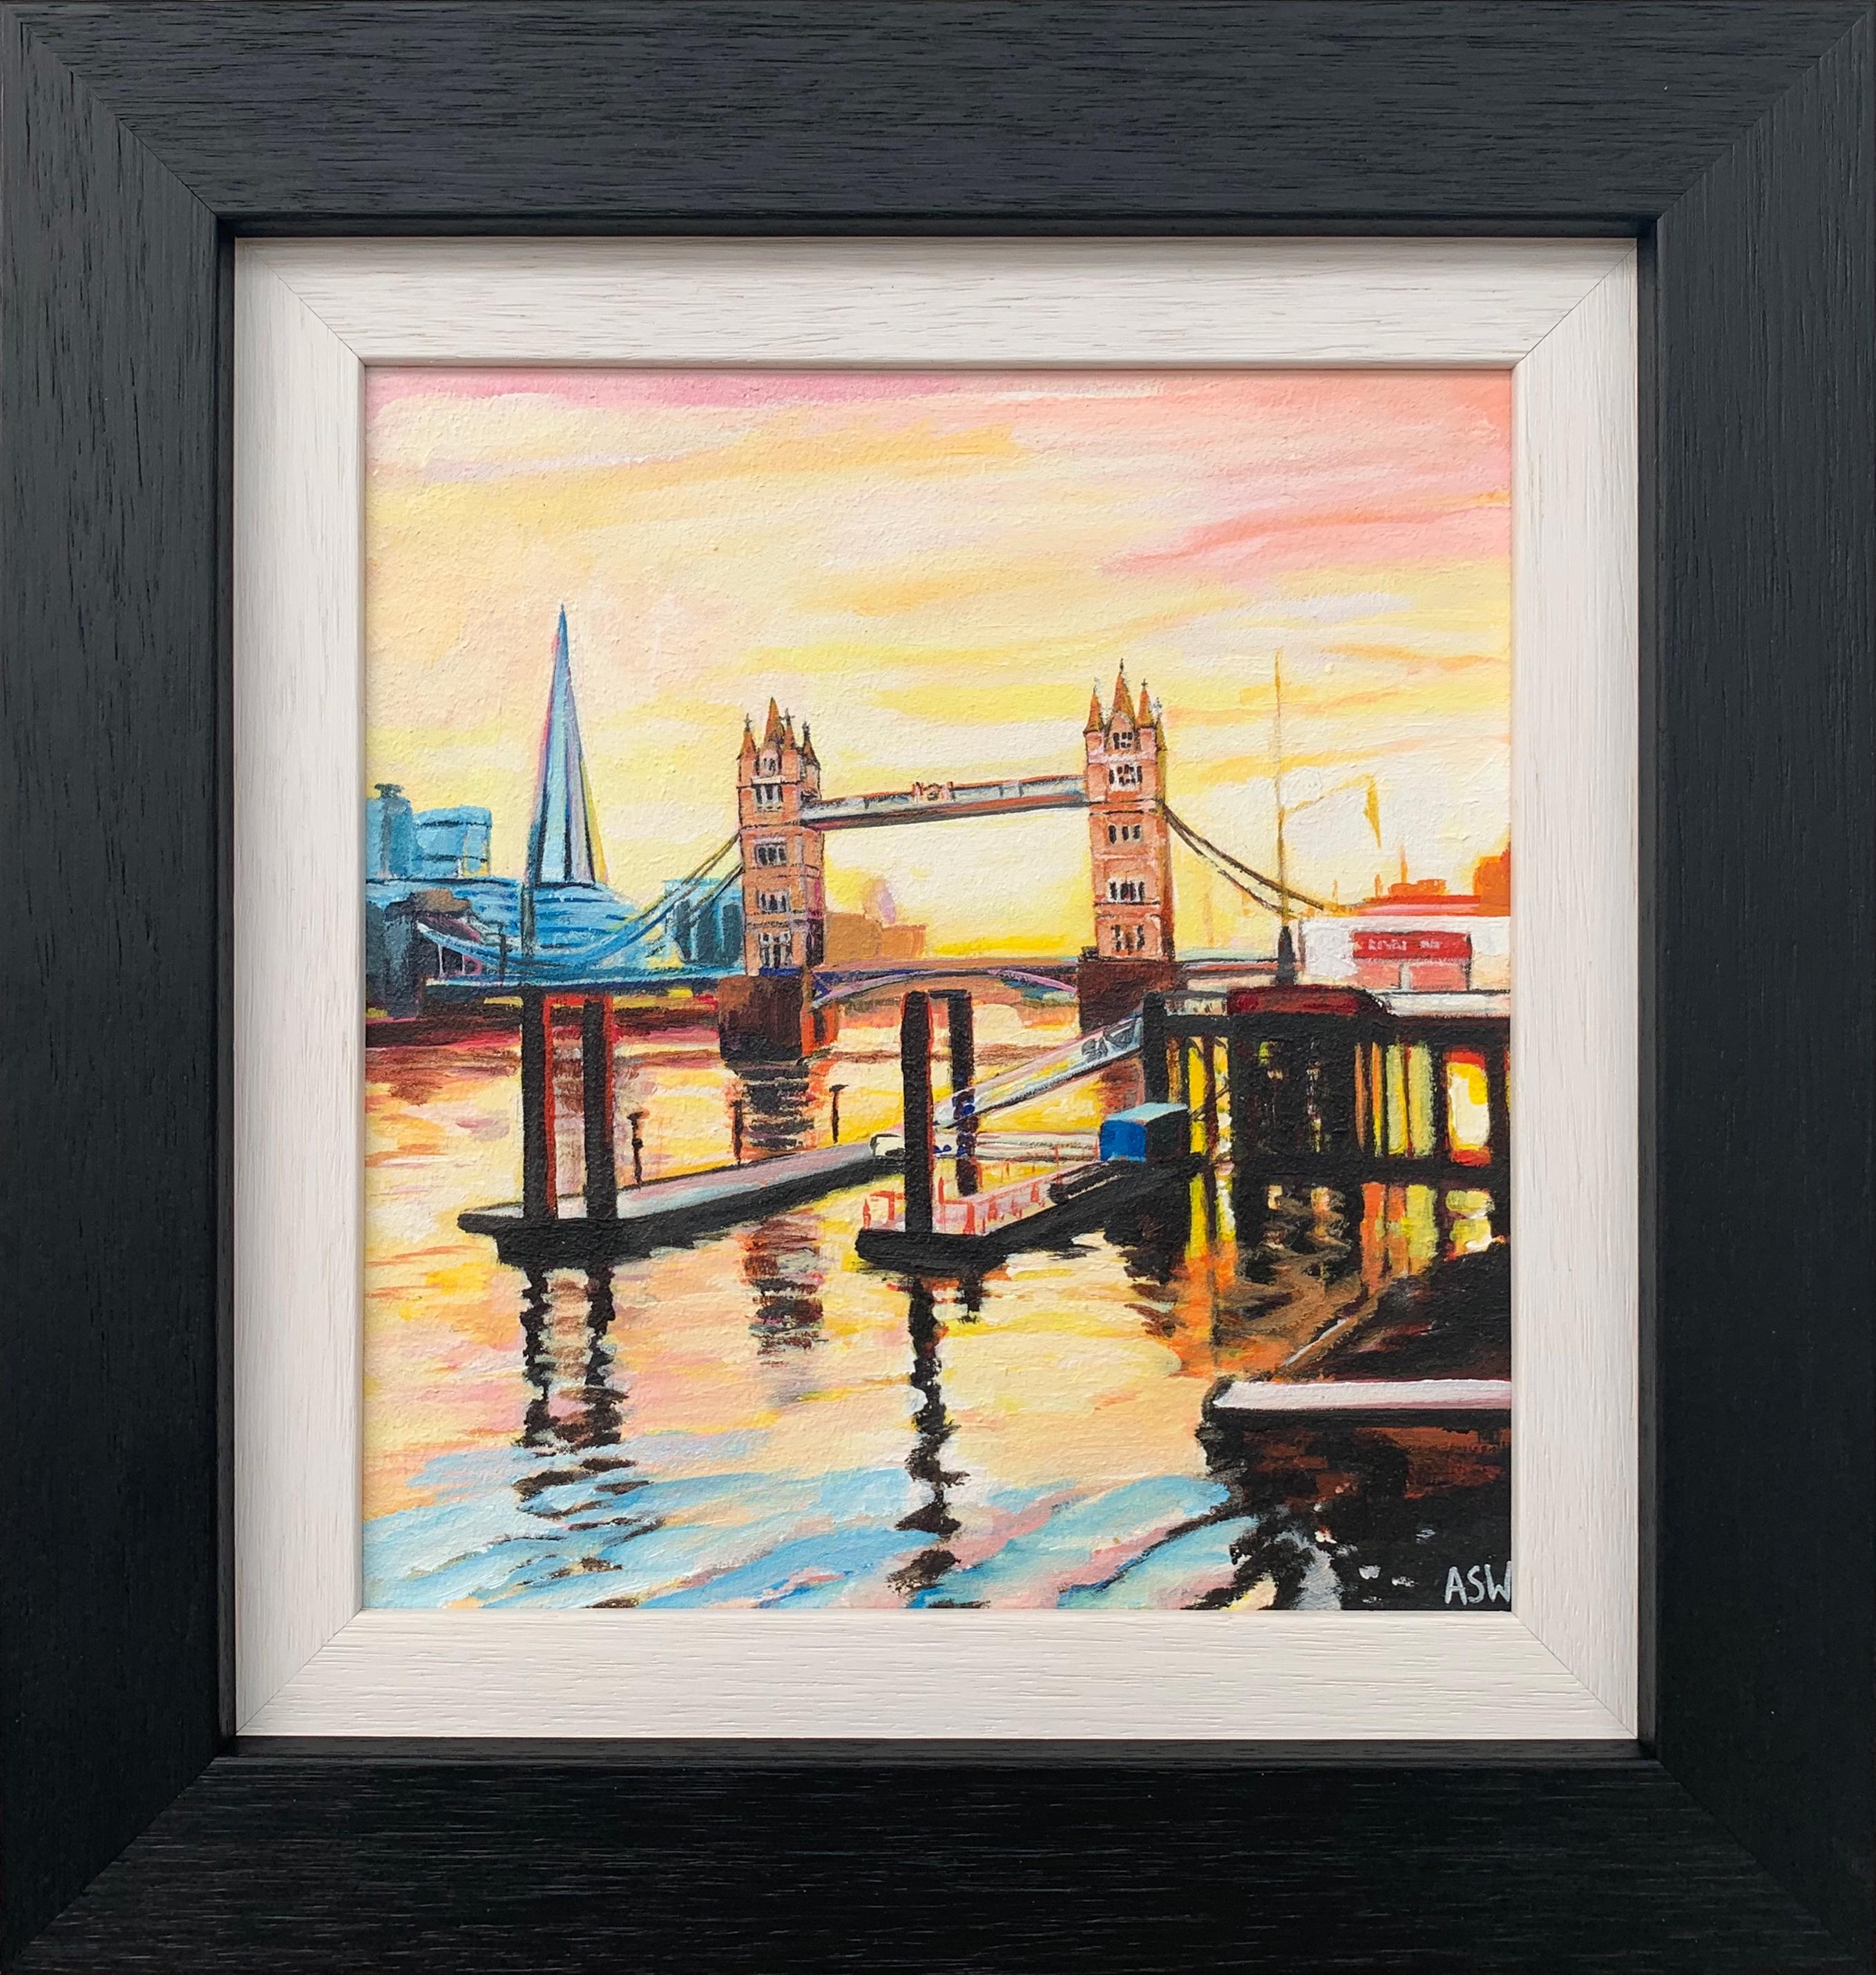 Miniature Painting of Shard & Tower Bridge London by British Contemporary Artist